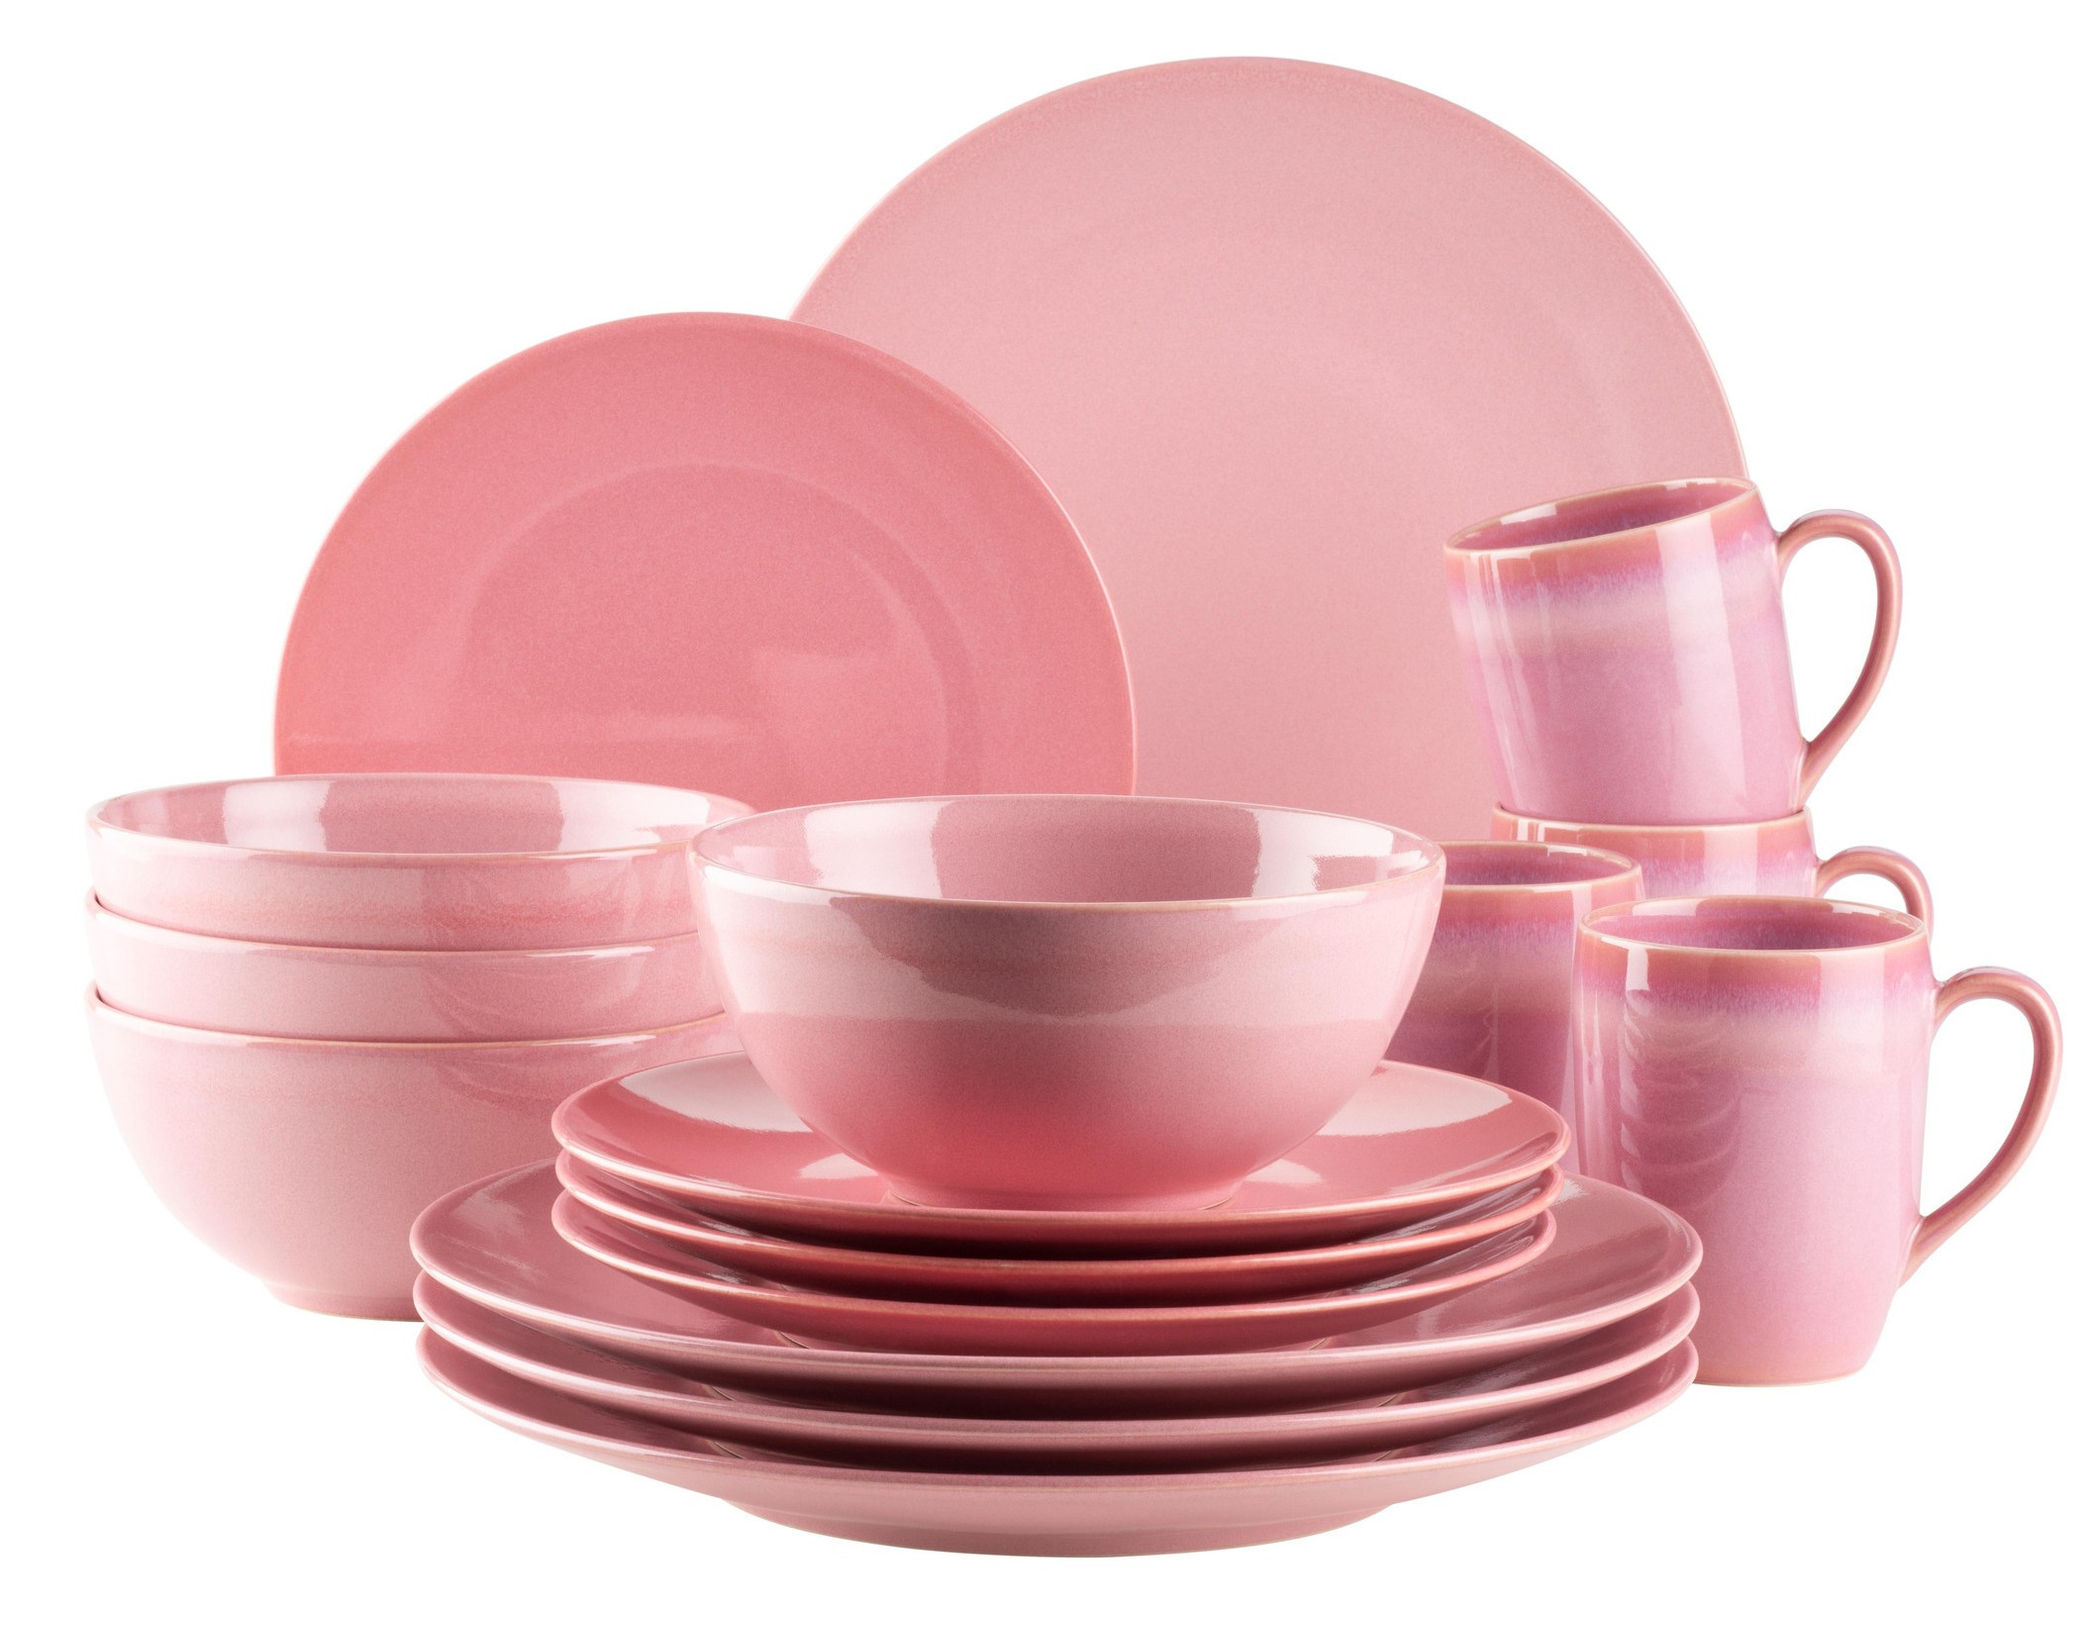 Mäser Geschirr-Set, Keramik Ossia 16 Farbe: Pink | Weltbild.de